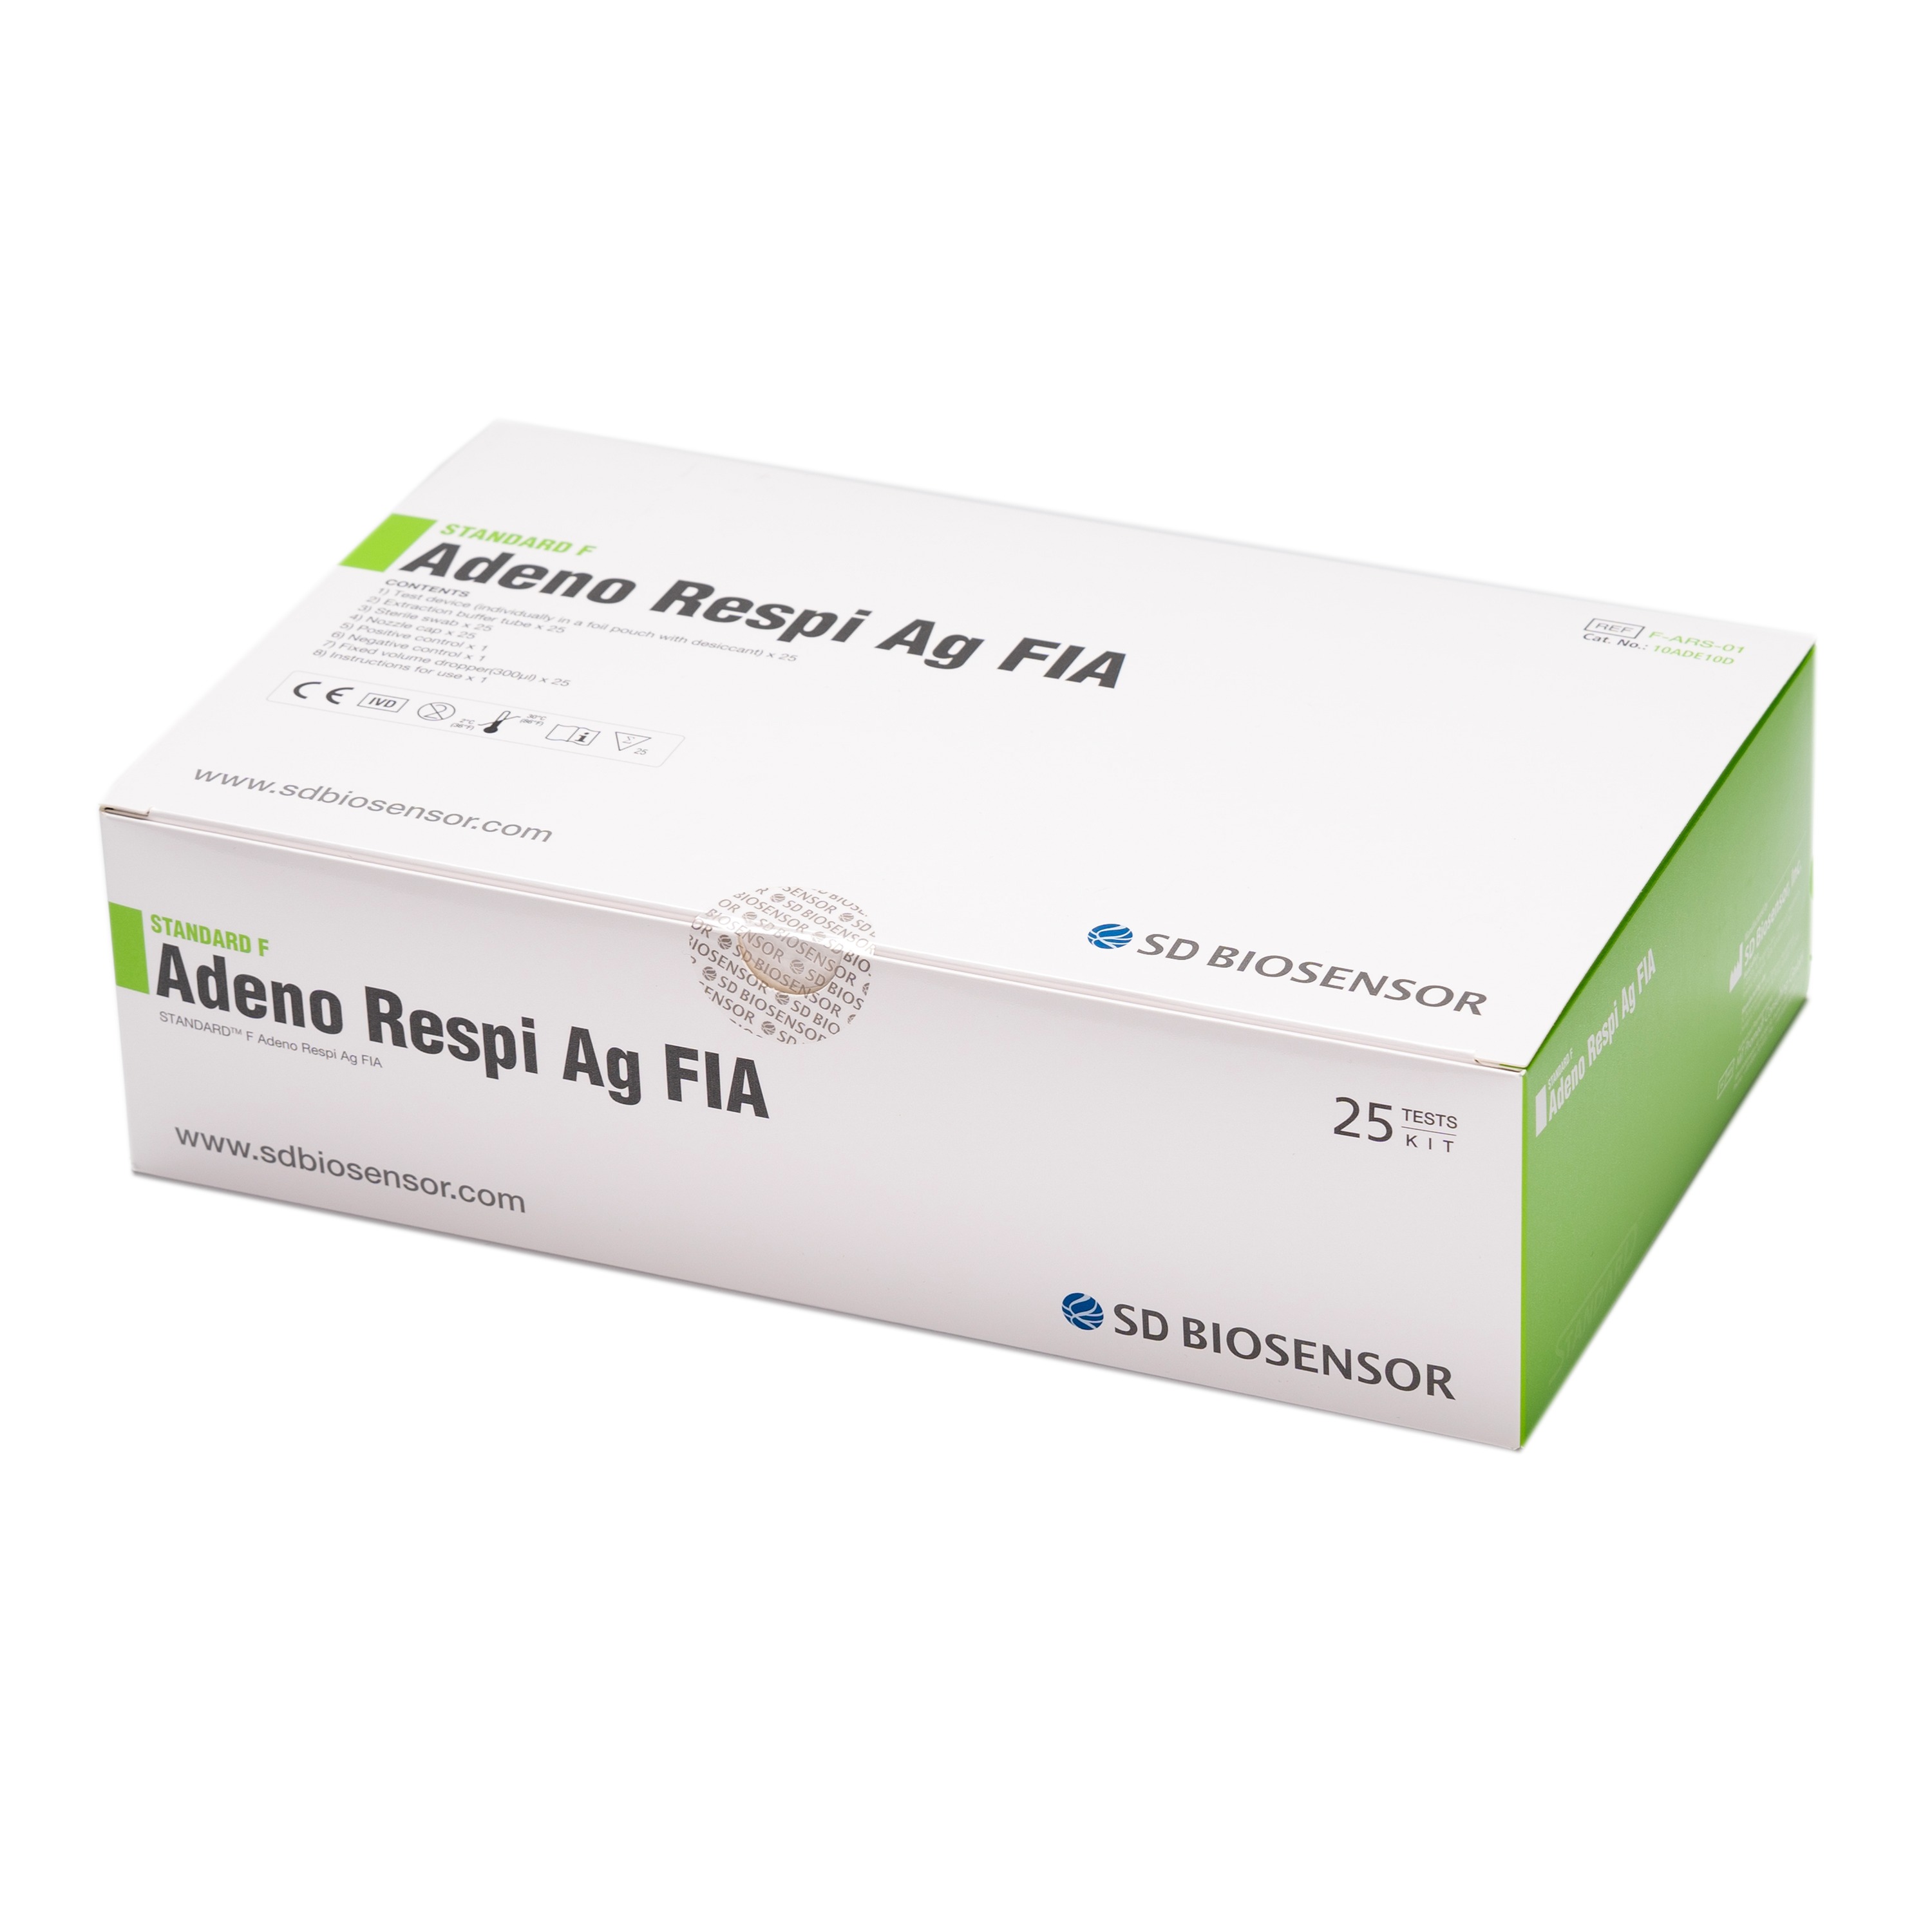 Standard F200 Respiratorischer Adenovirus Ag Testkit (25 Stk.)